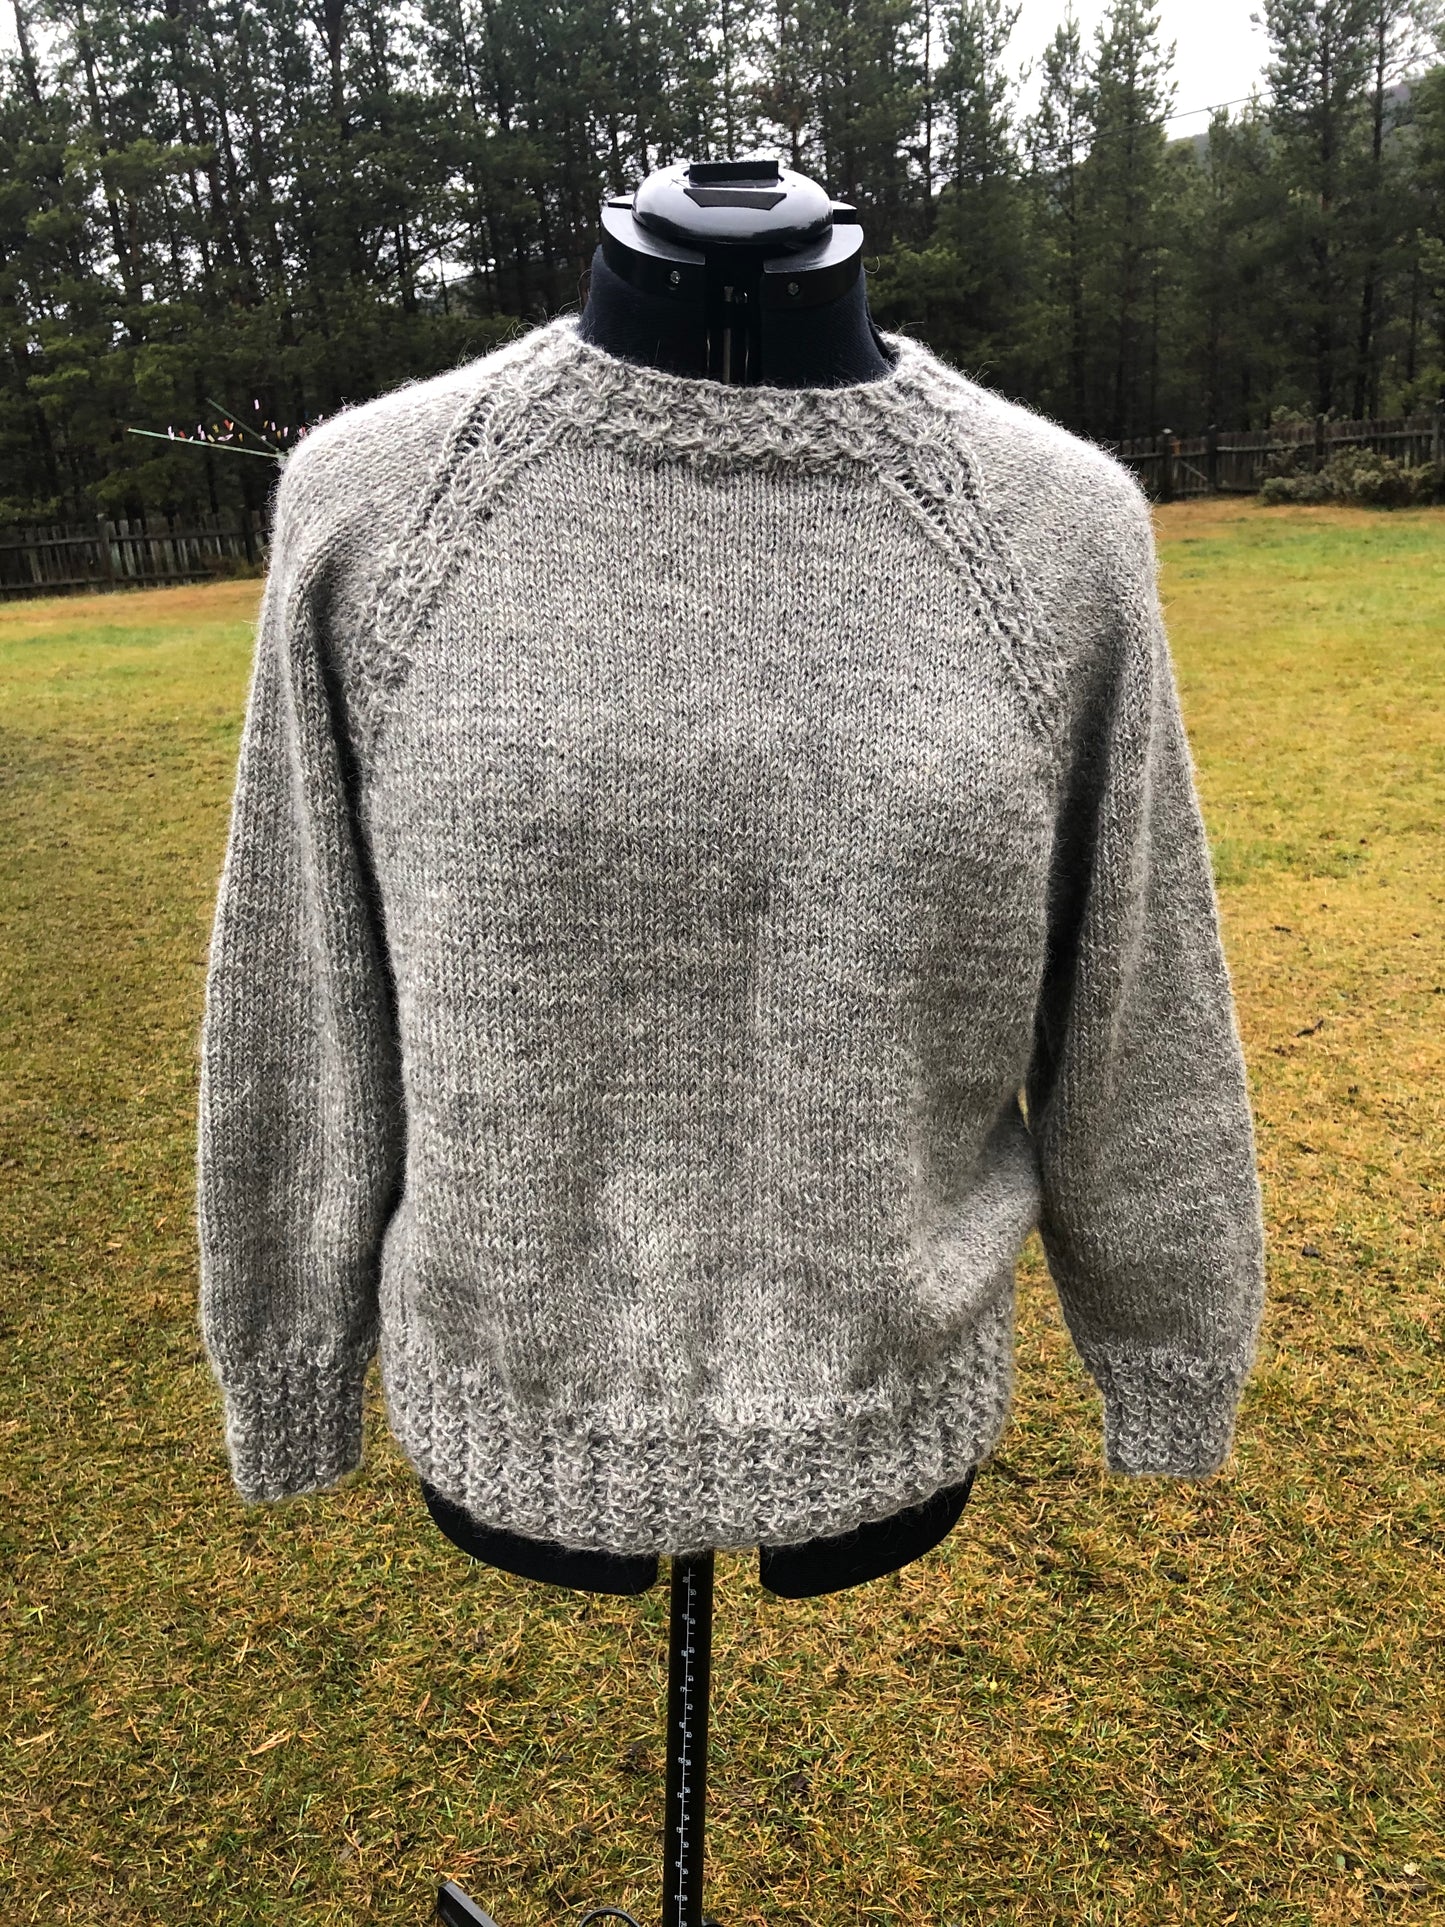 Strikkeoppskrift-heftet på genser i raglan felling med falsk flette med lue og votter til.